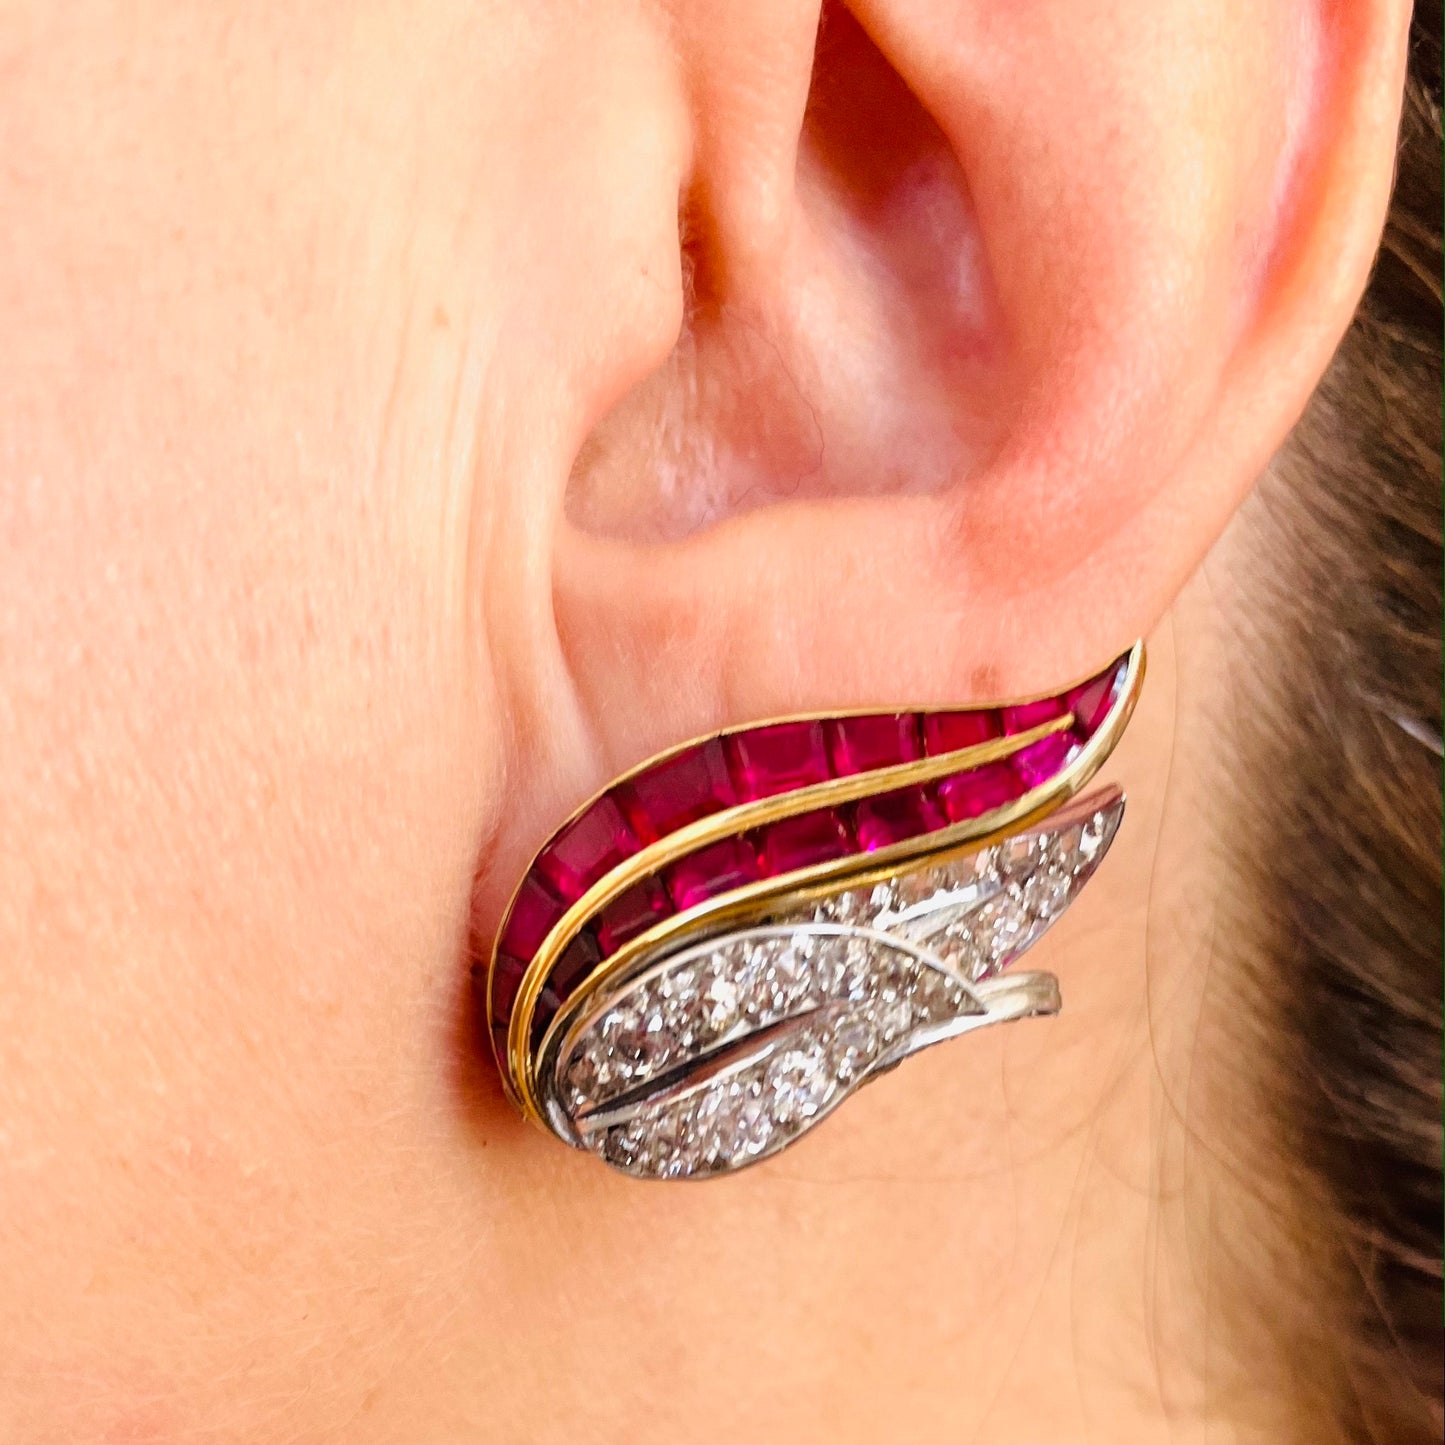 Rene Boivin French 1960s Platinum & 18KT Yellow Gold Diamond & Ruby Earrings worn on ear